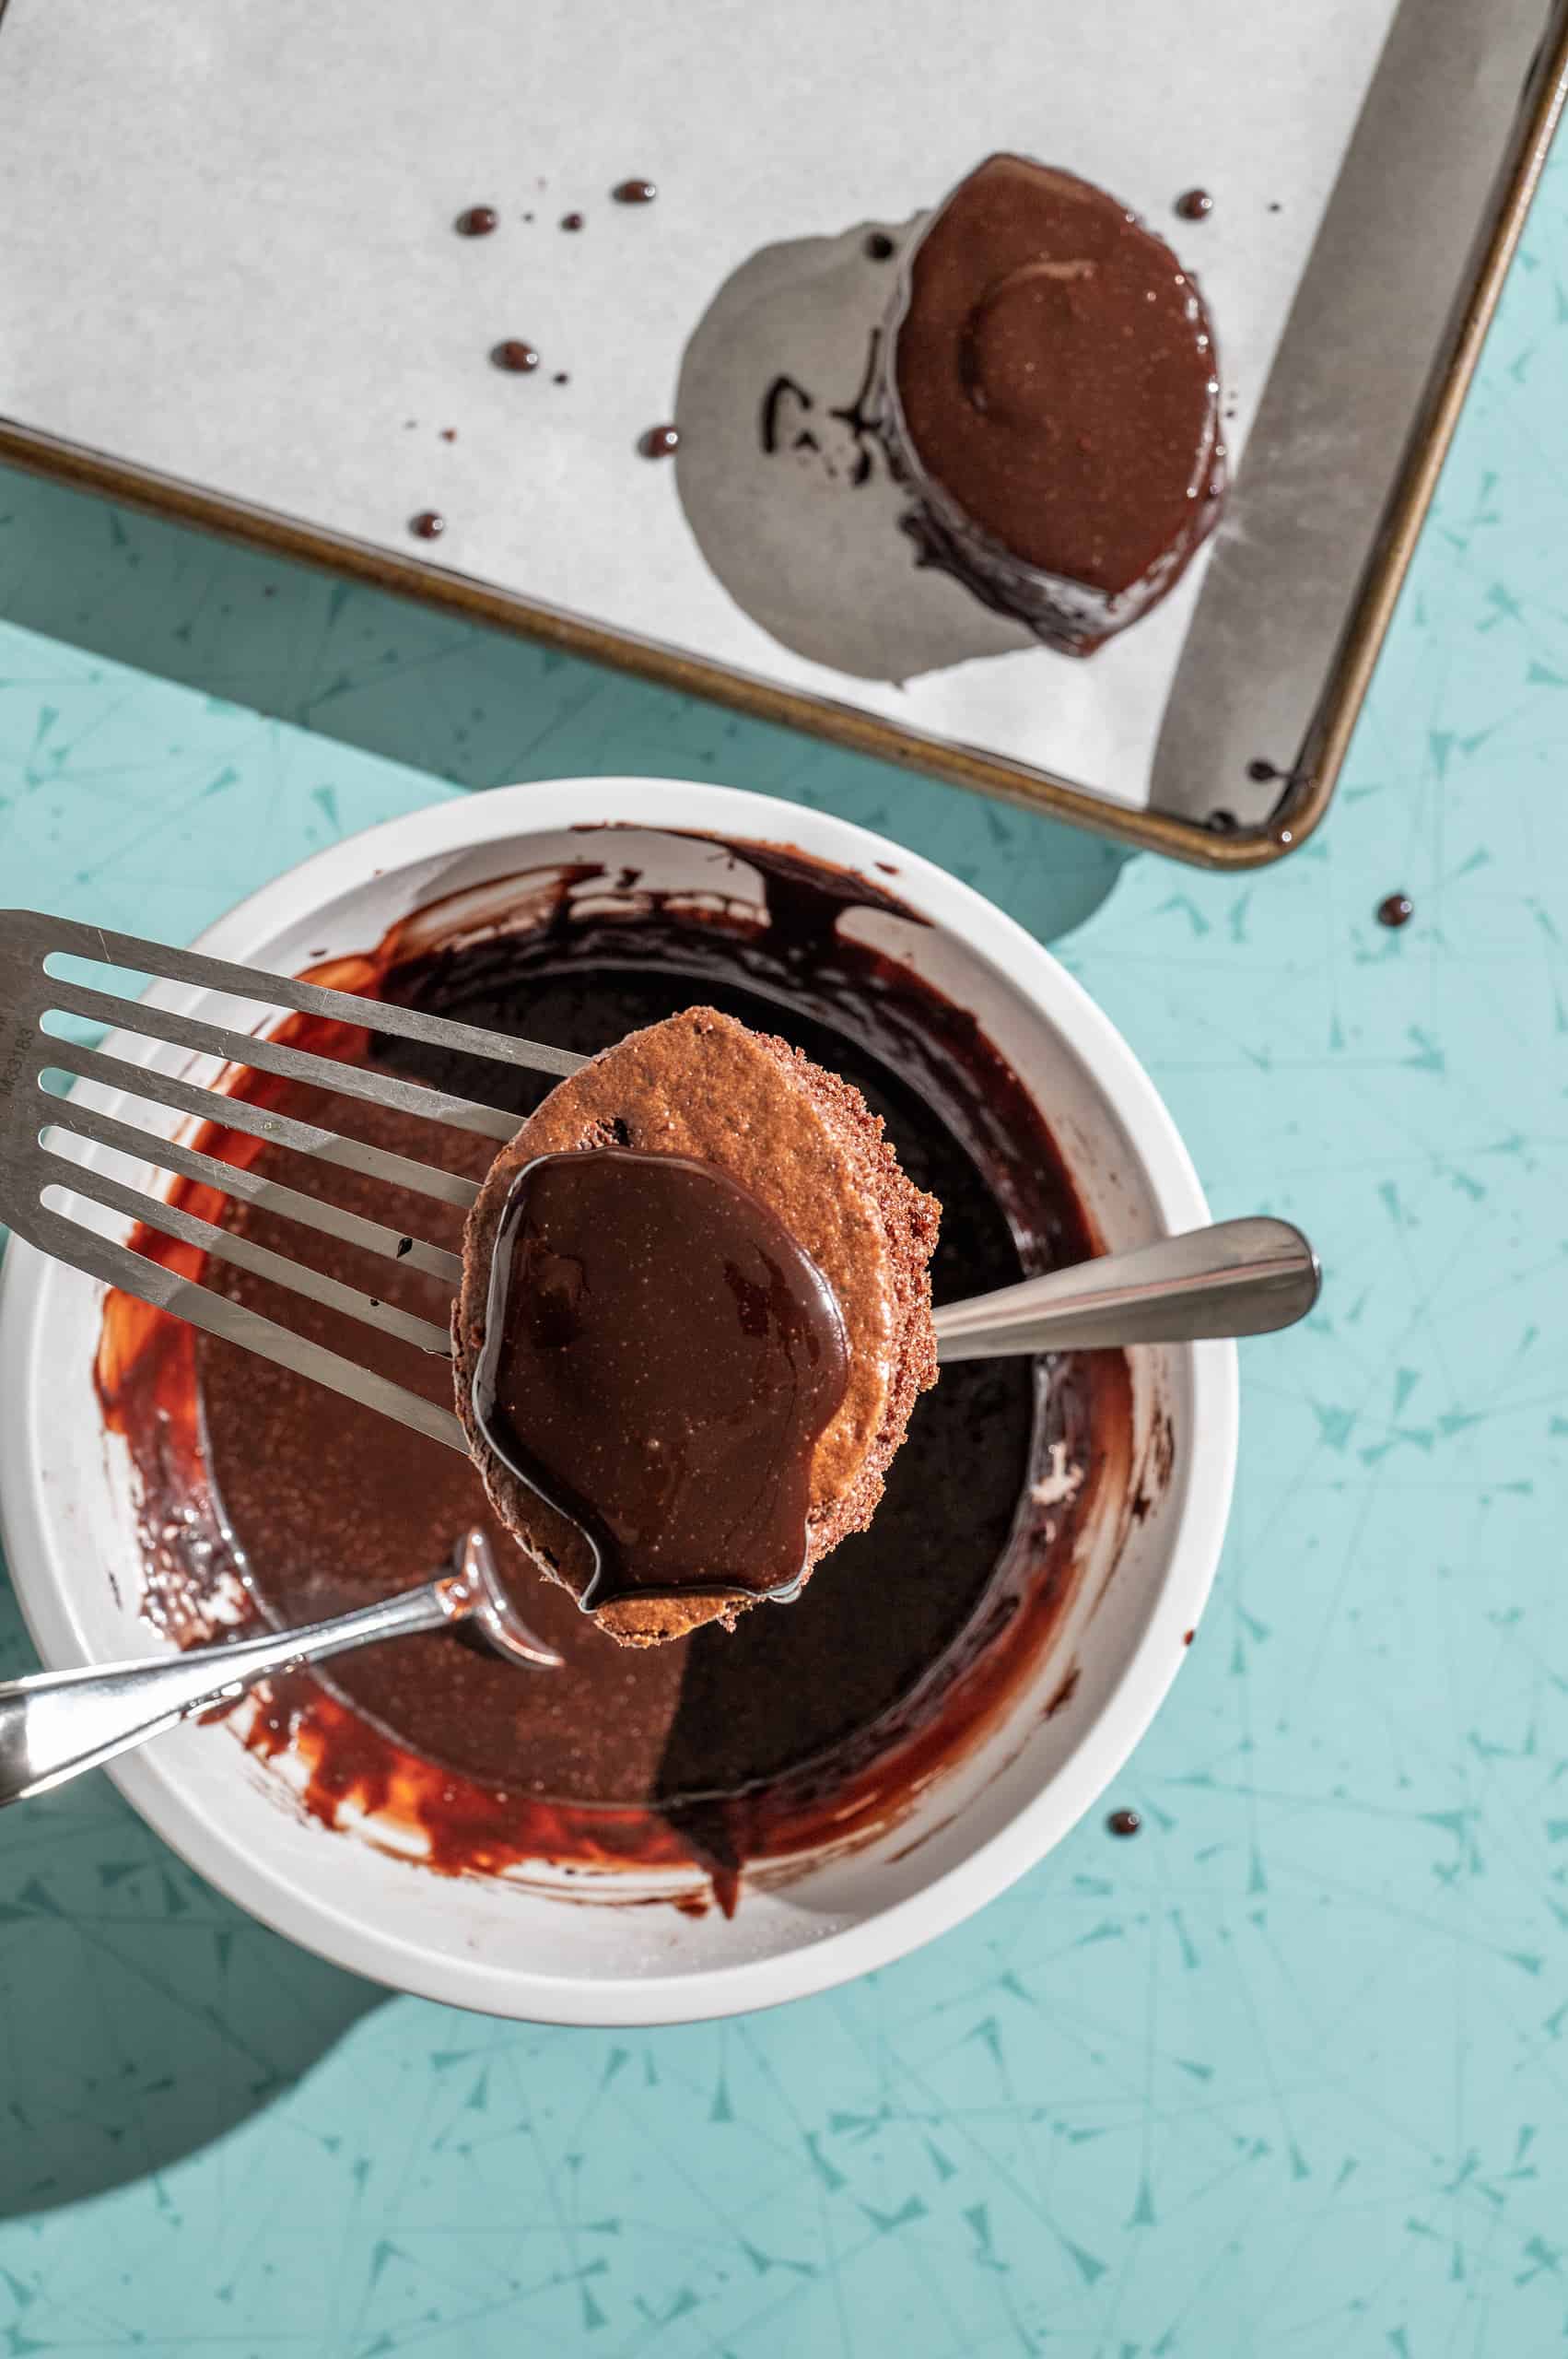 dipping mini chocolate football cake into chocolate glaze coating